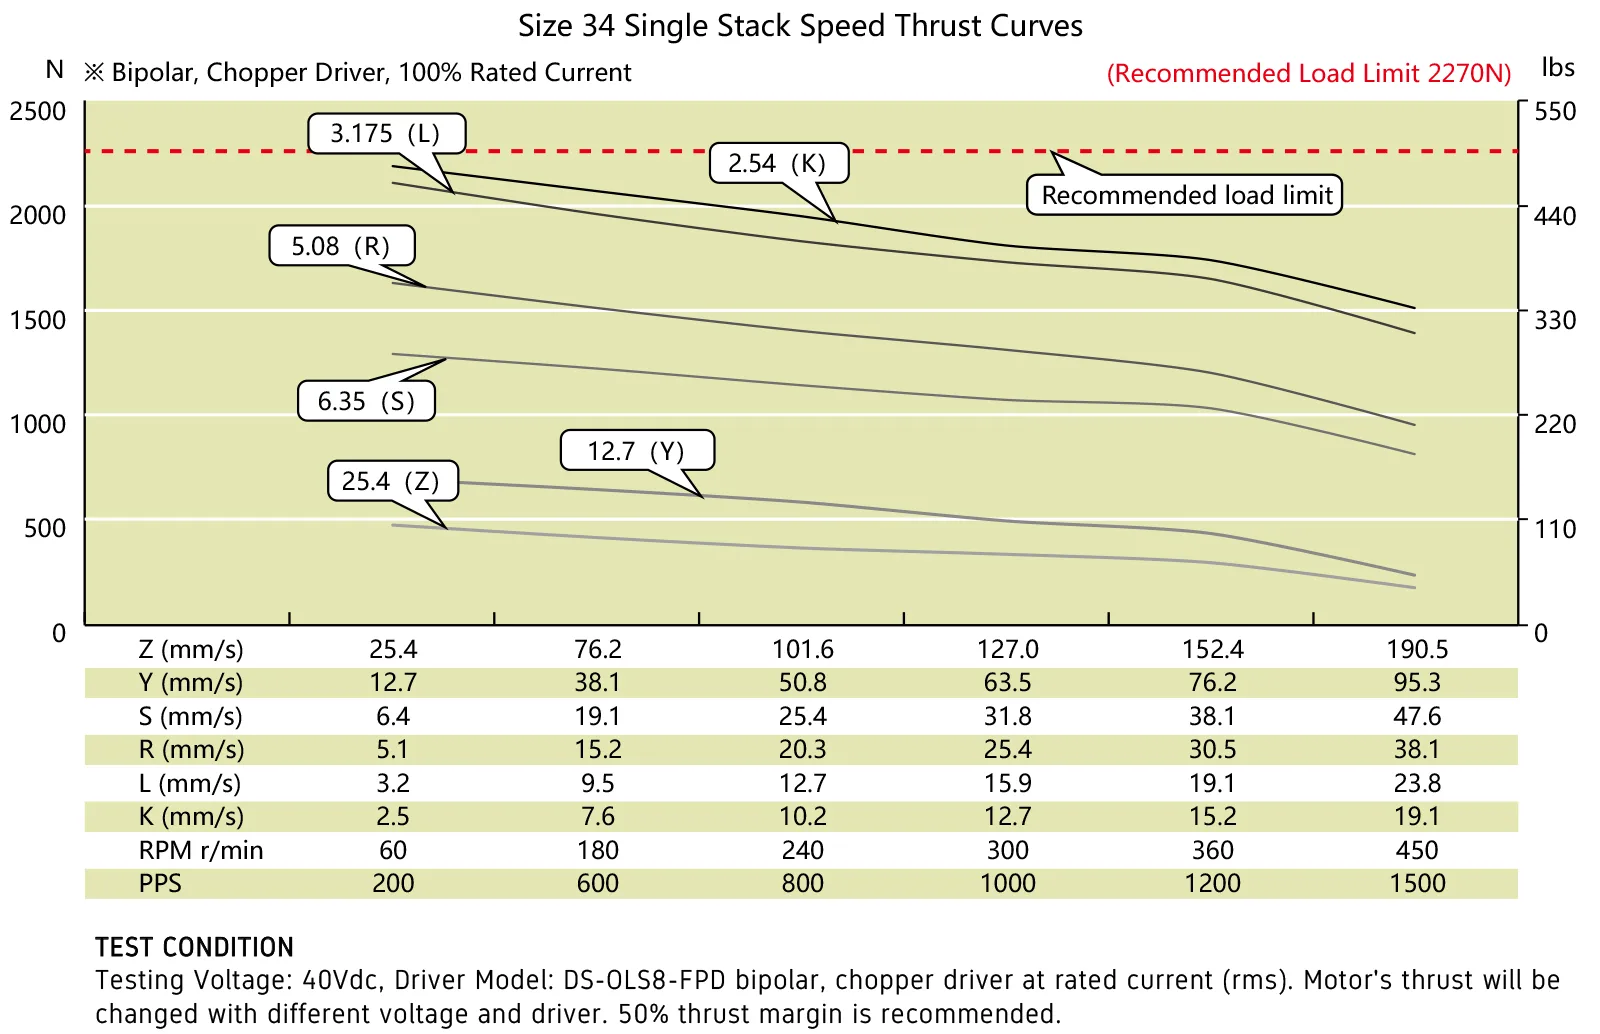 Speed Thrust Curves